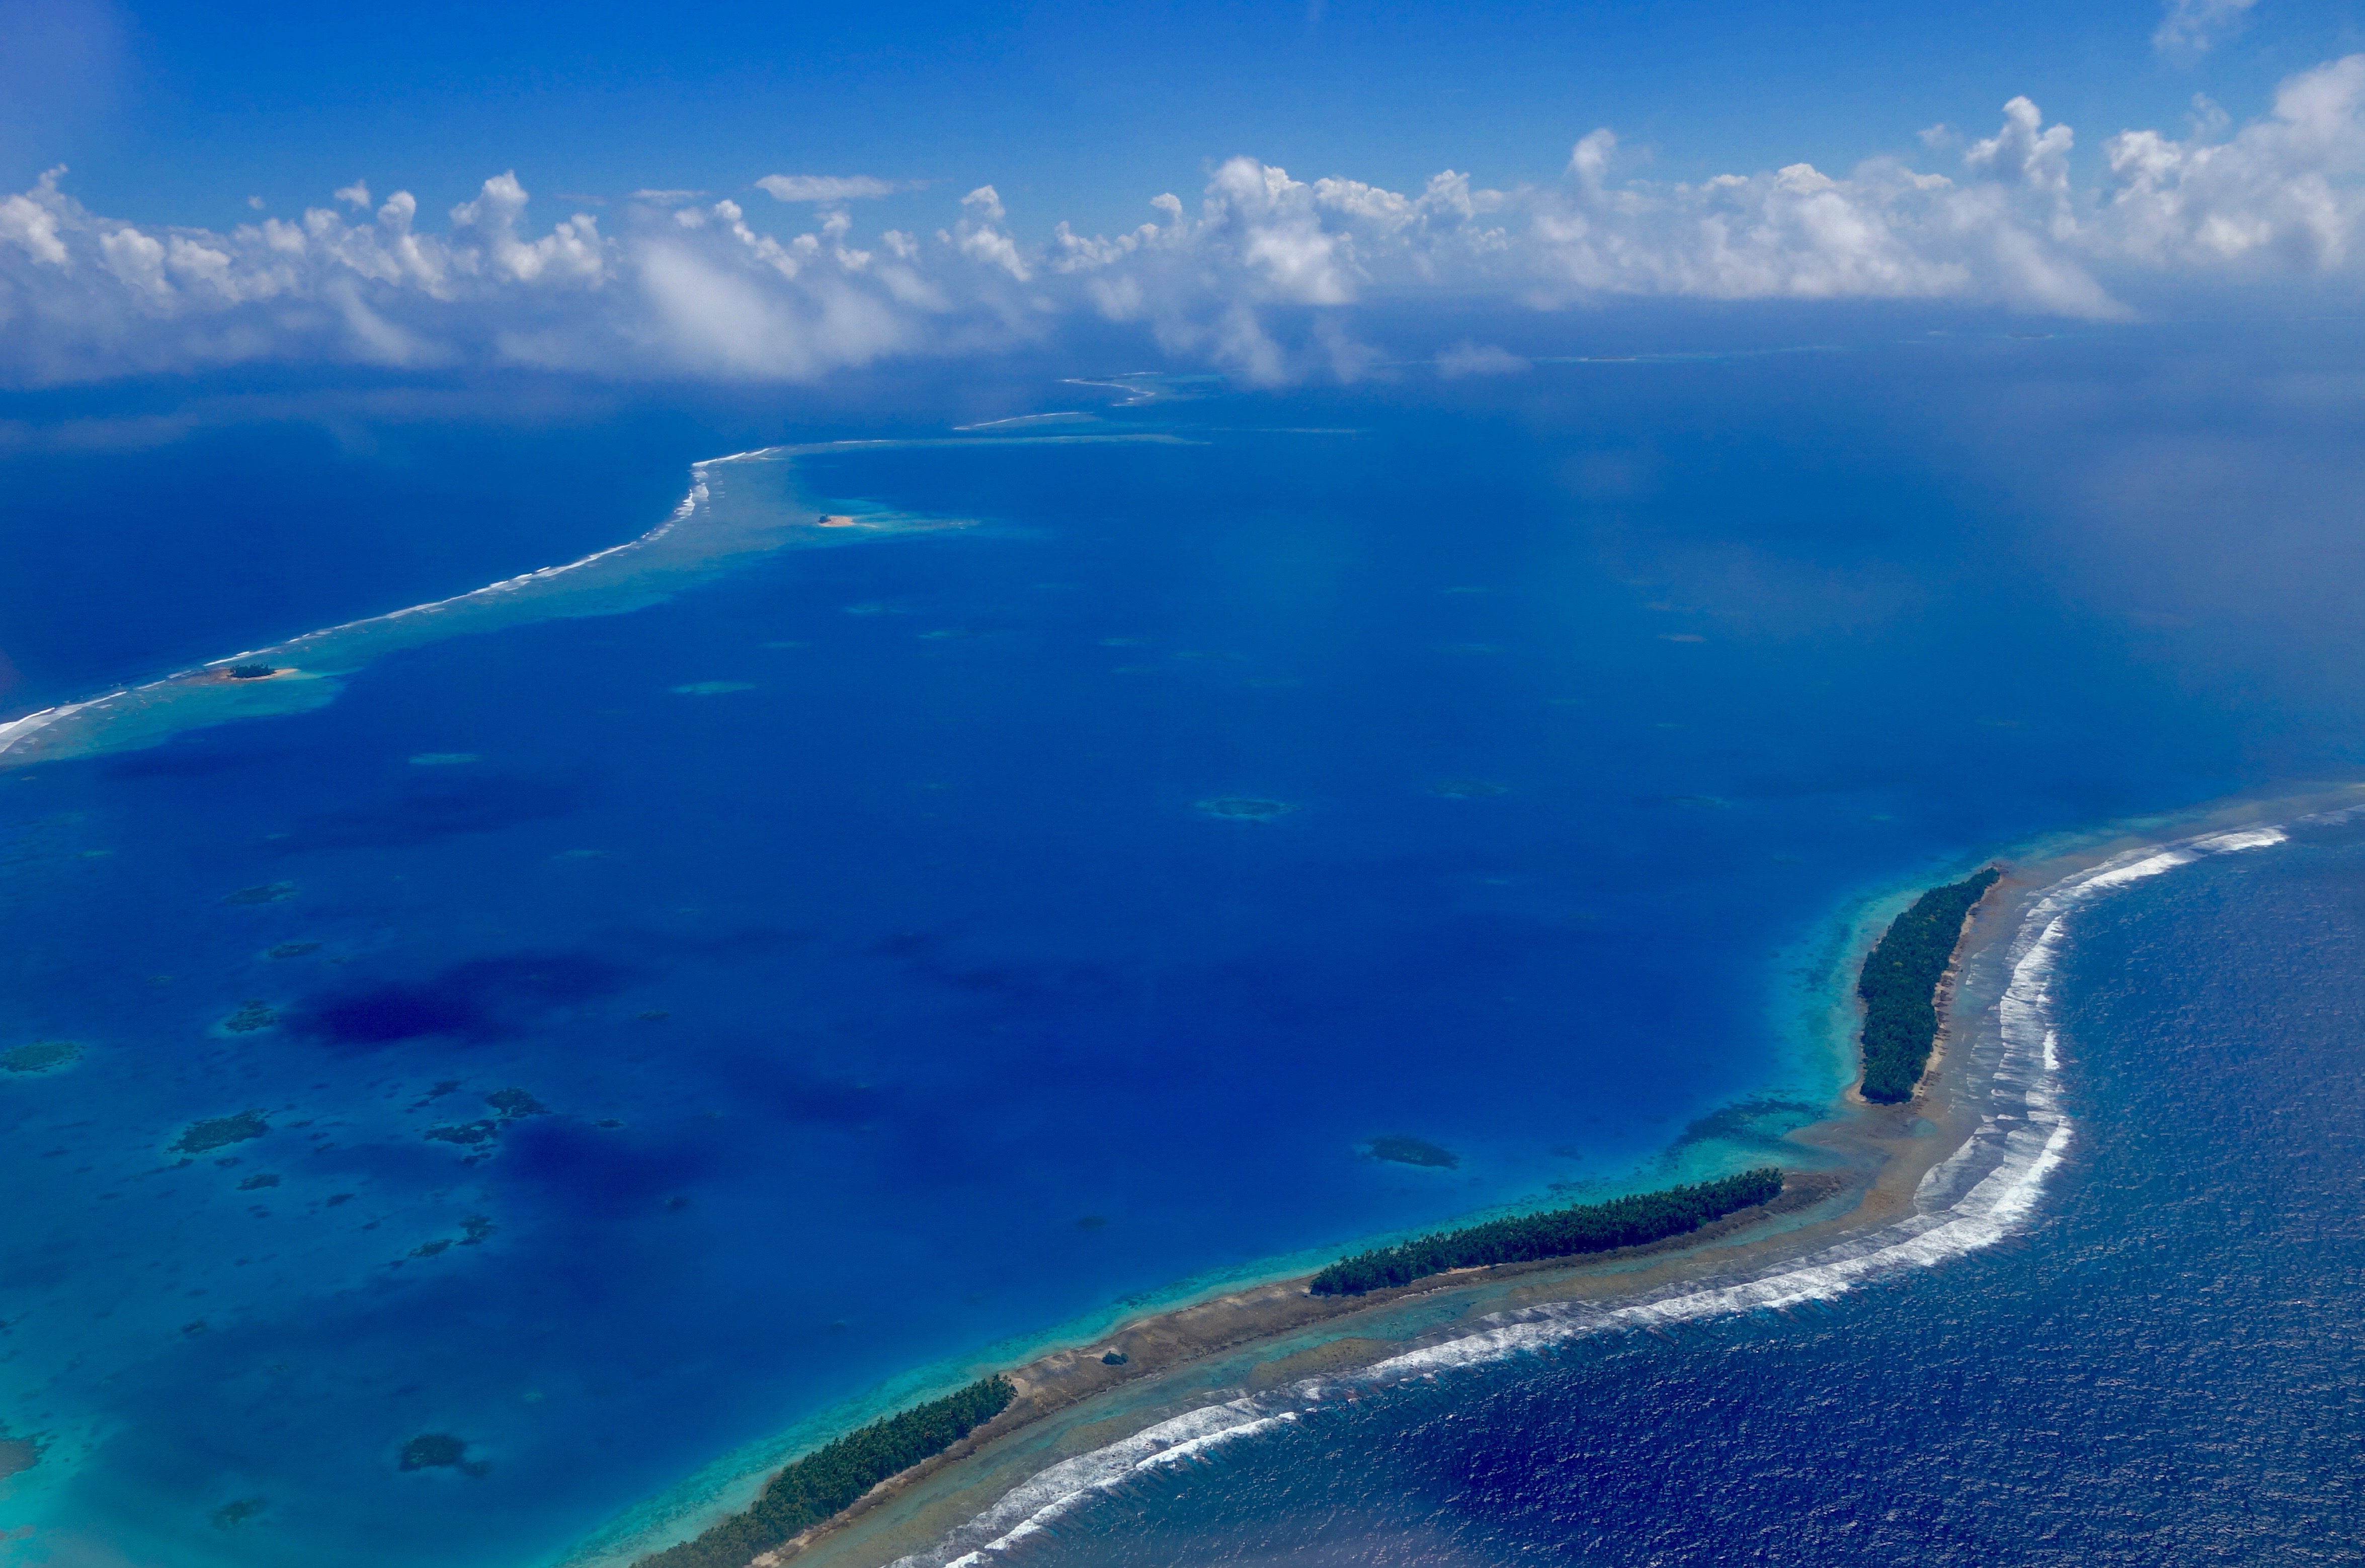 Народы тихого океана. Остров Фунафути, Тувалу. Атолл Тувалу. Полинезийское государство Тувалу. Атолл в тихом океане.